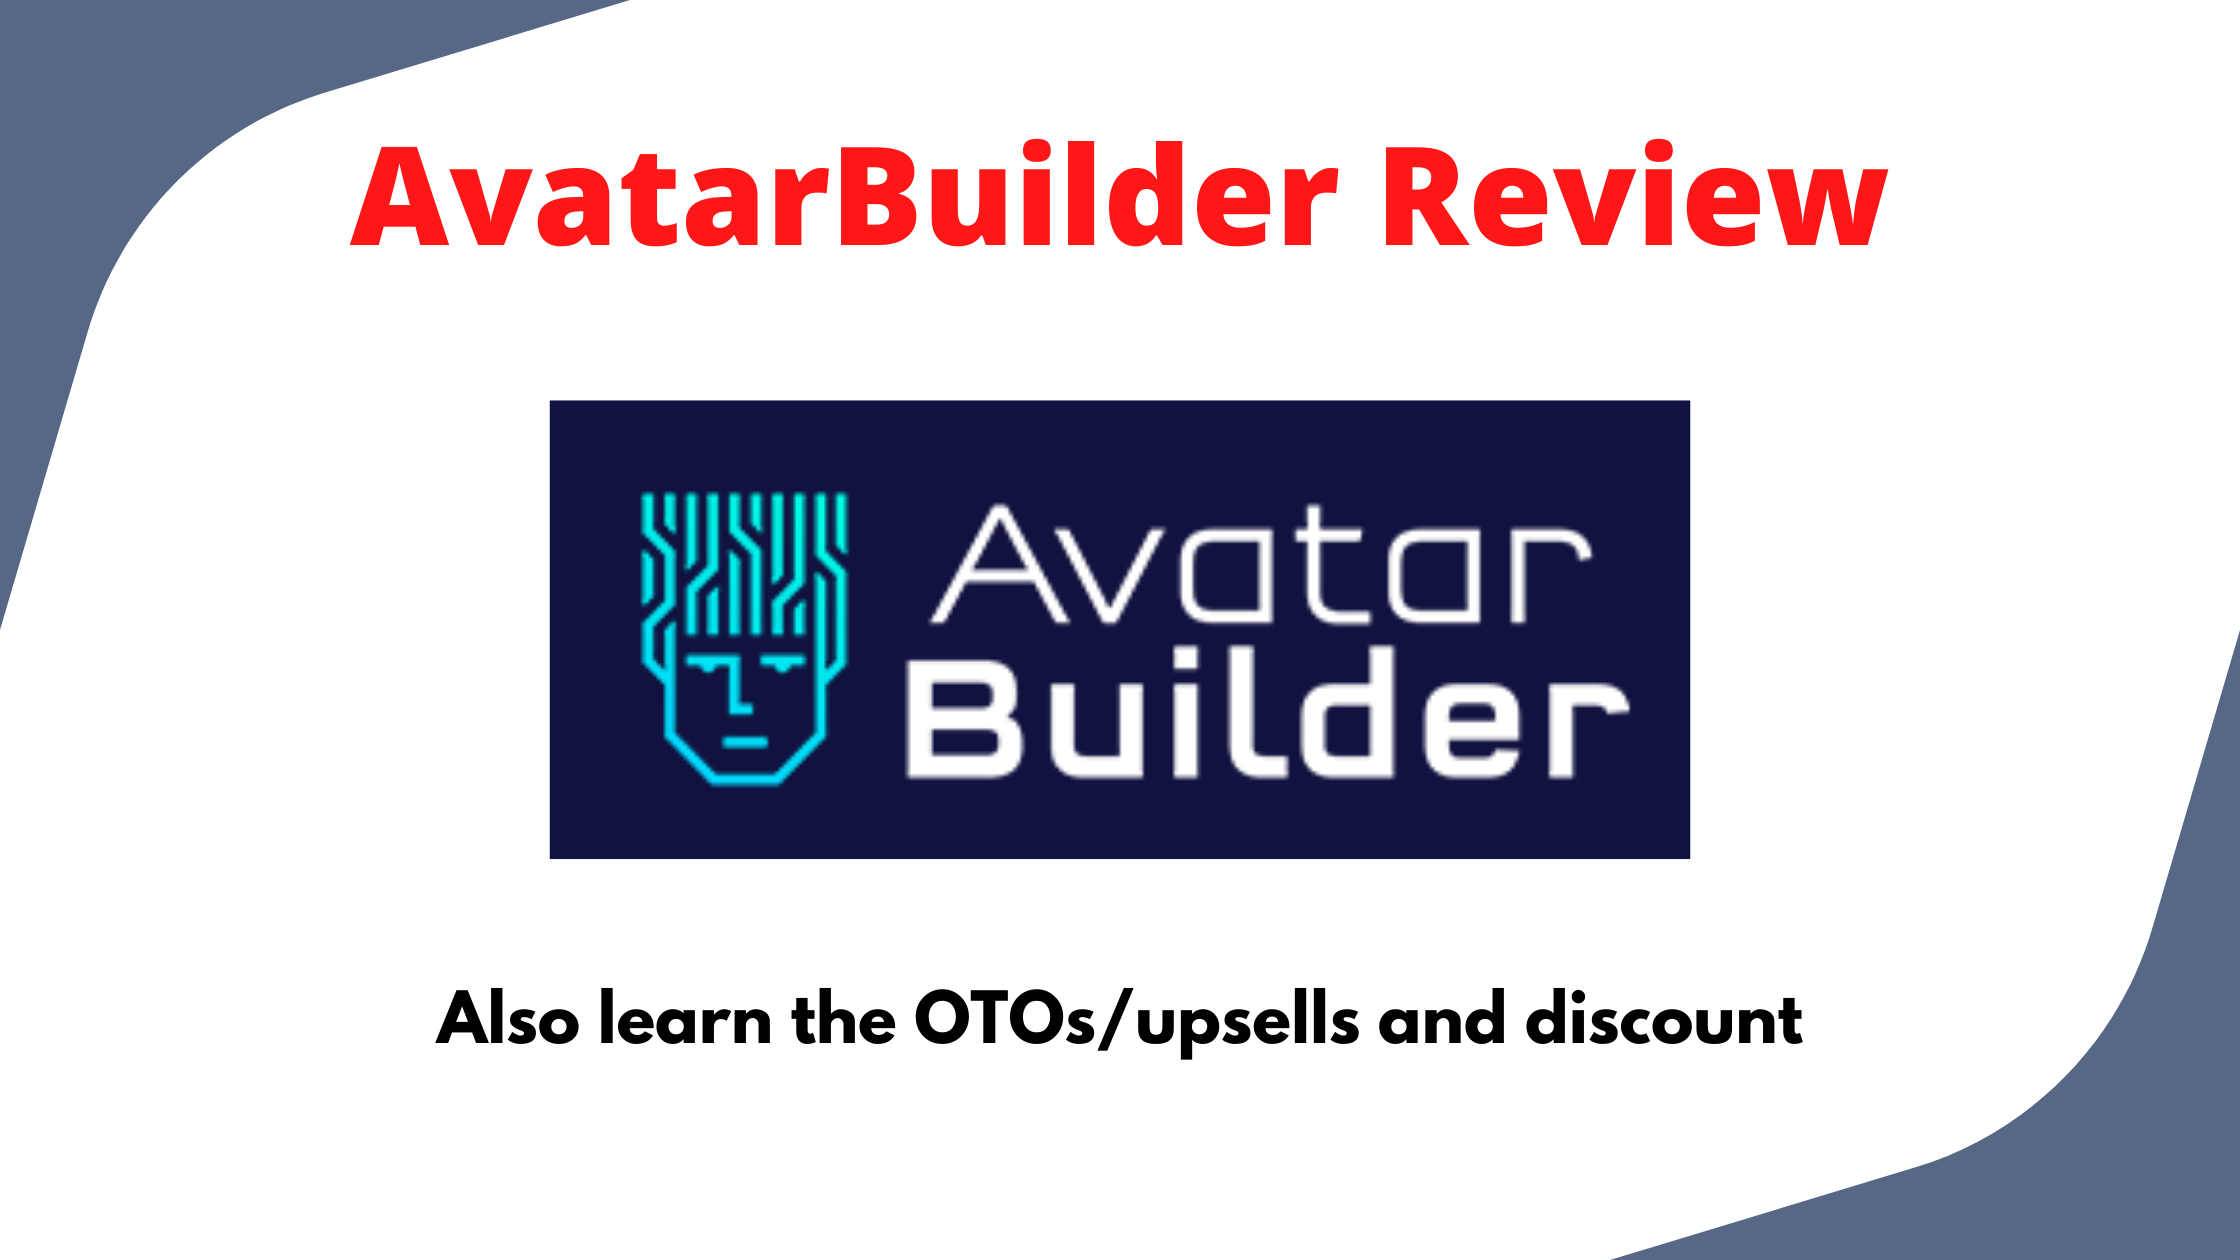 AvatarBuilder Review